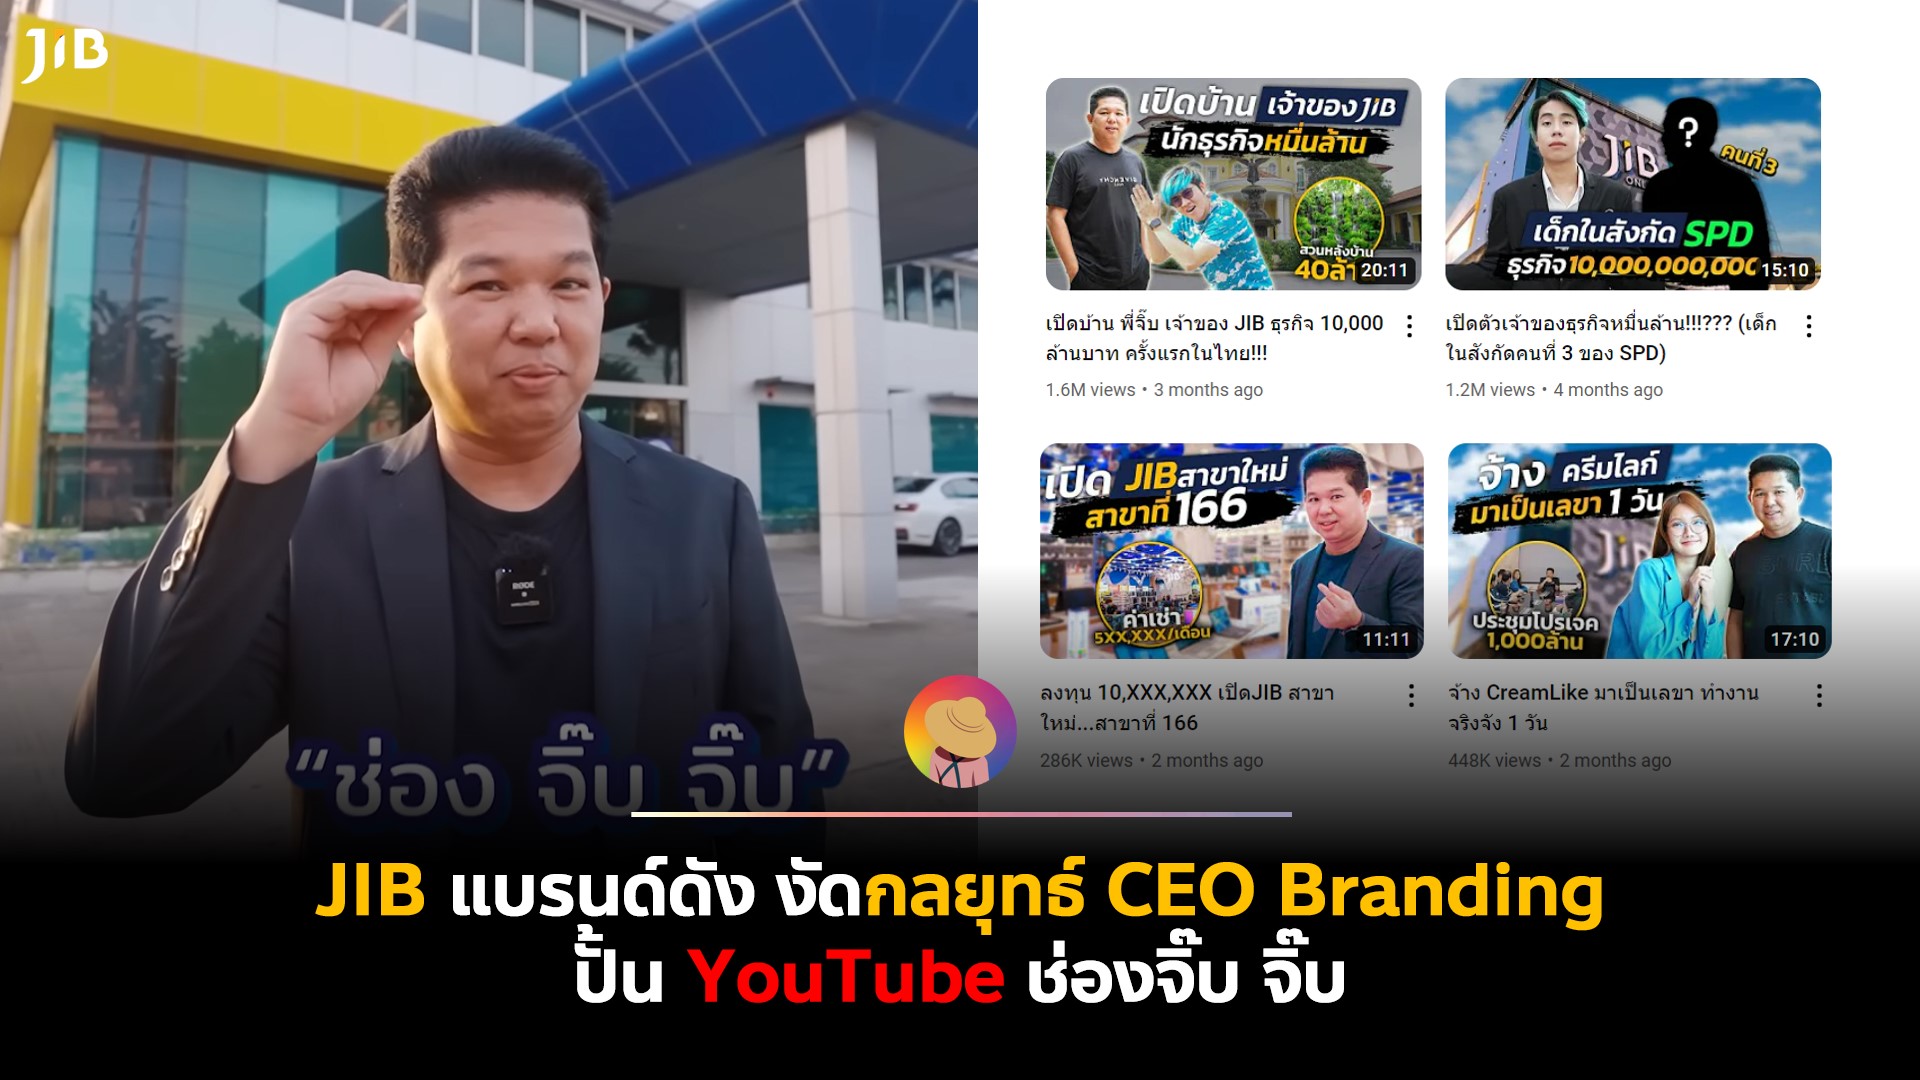 JIB แบรนด์ดัง งัดกลยุทธ์ CEO Branding ปั้น YouTube ช่องจิ๊บ จิ๊บ